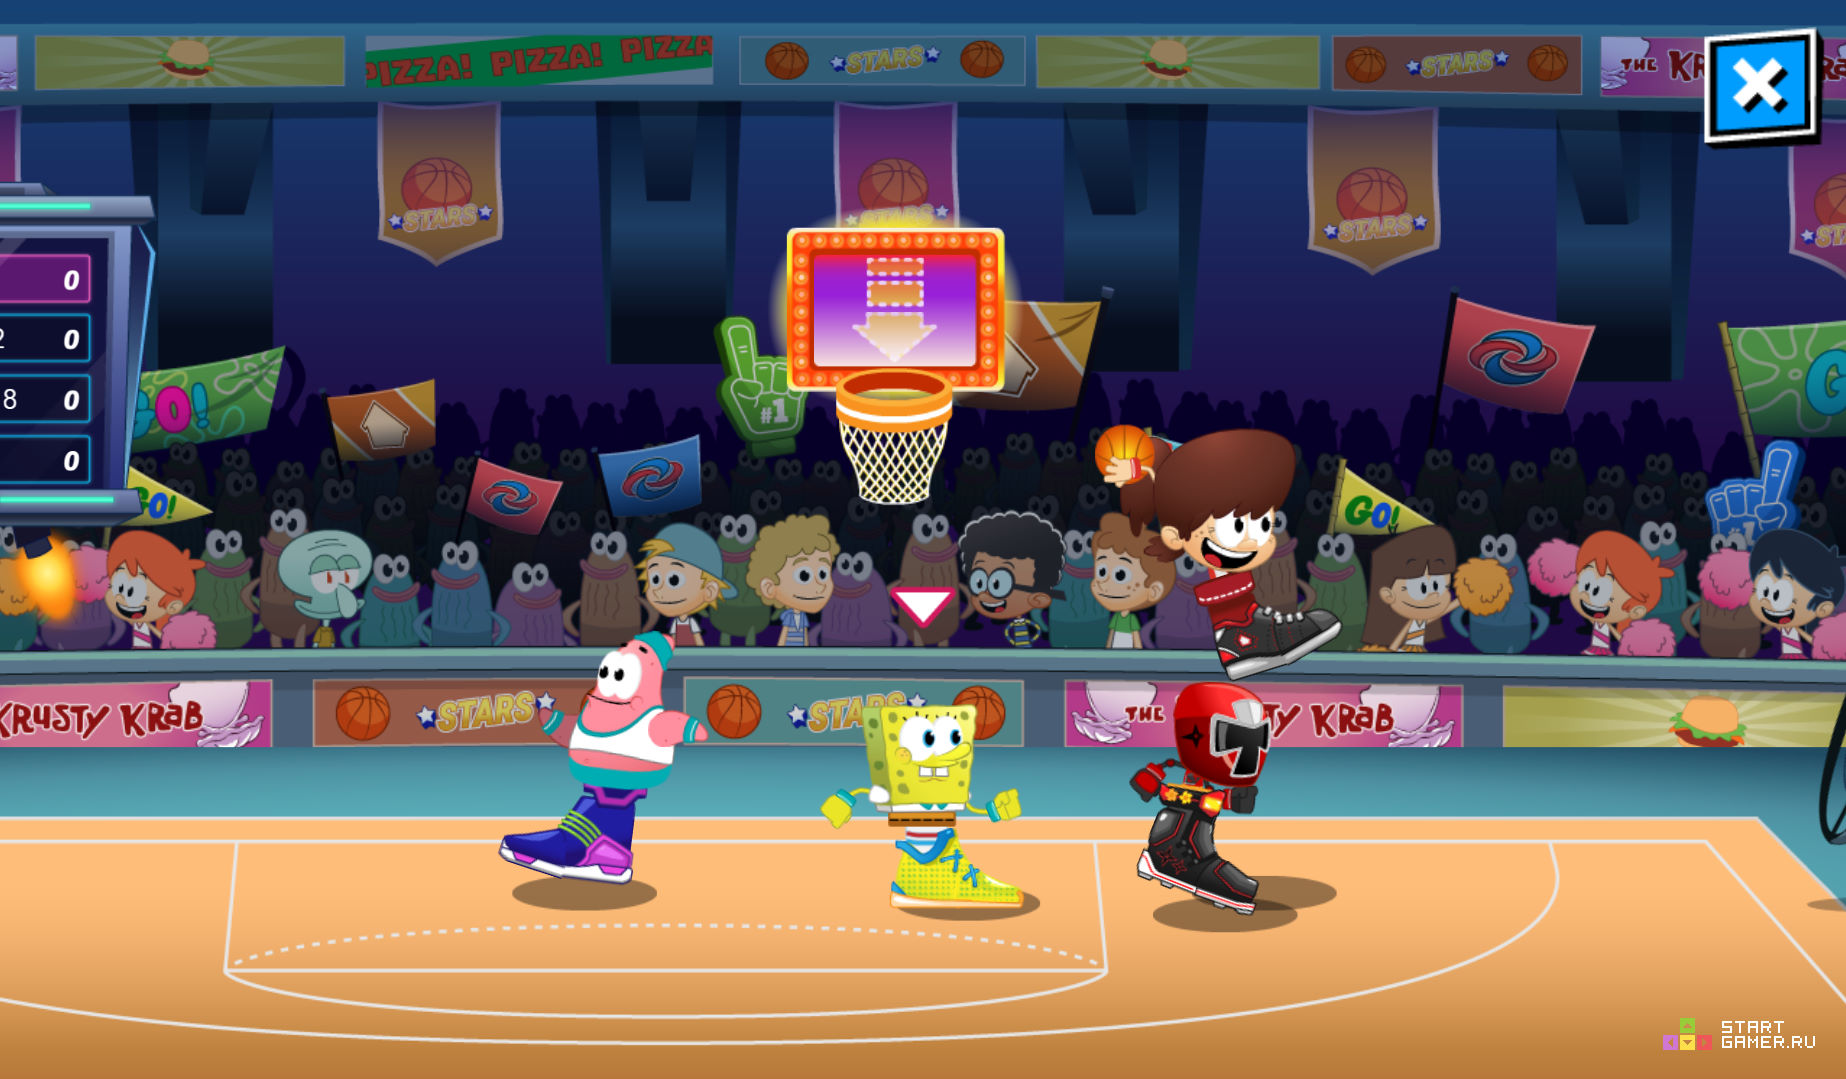 Игра Никелодеон: Звёзды Баскетбола 3 (Nickelodeon: Basketball Stars 3) - иг...